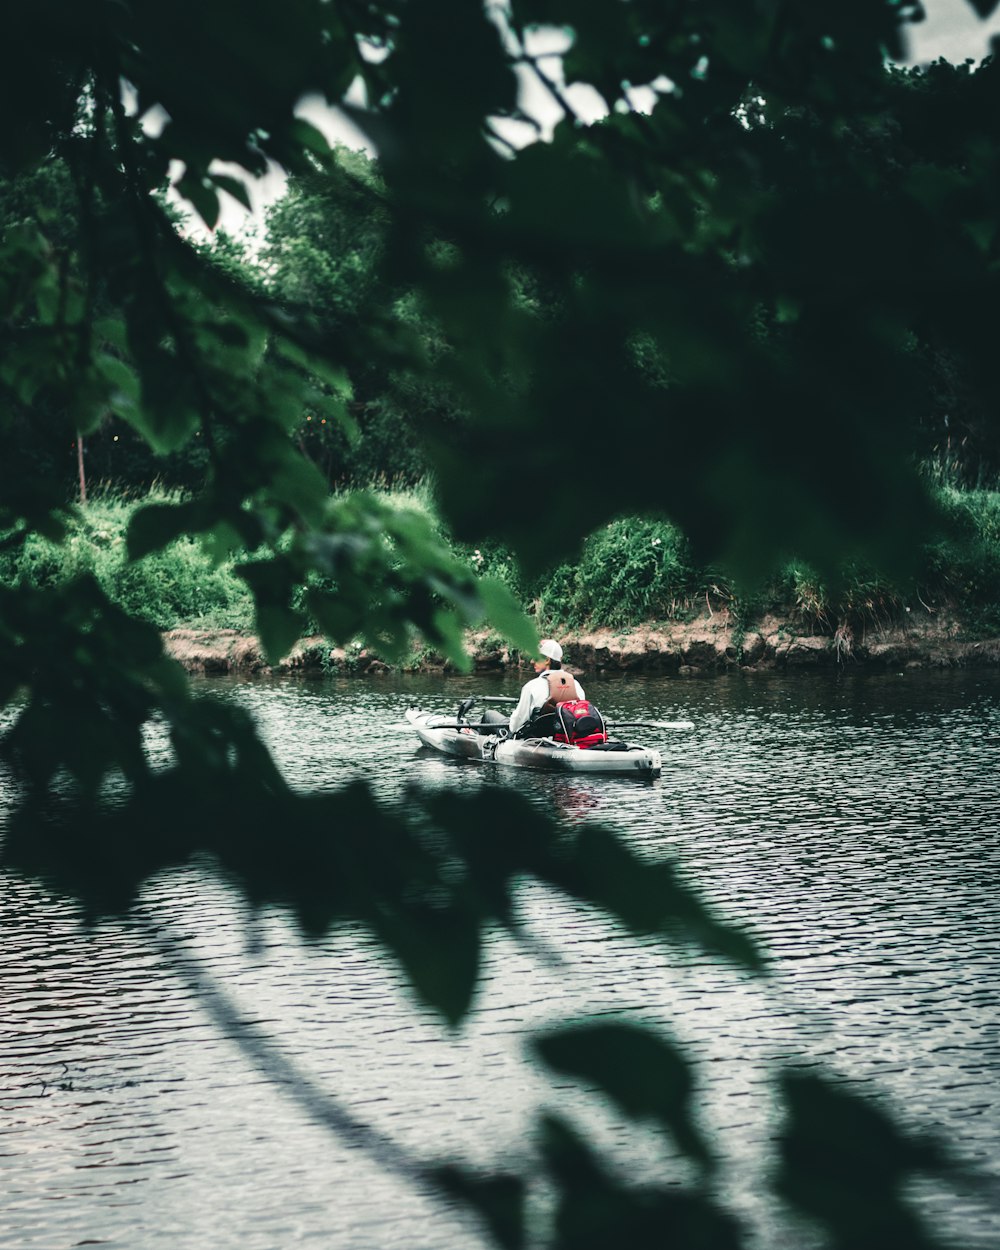 man in red shirt riding on red kayak on river during daytime